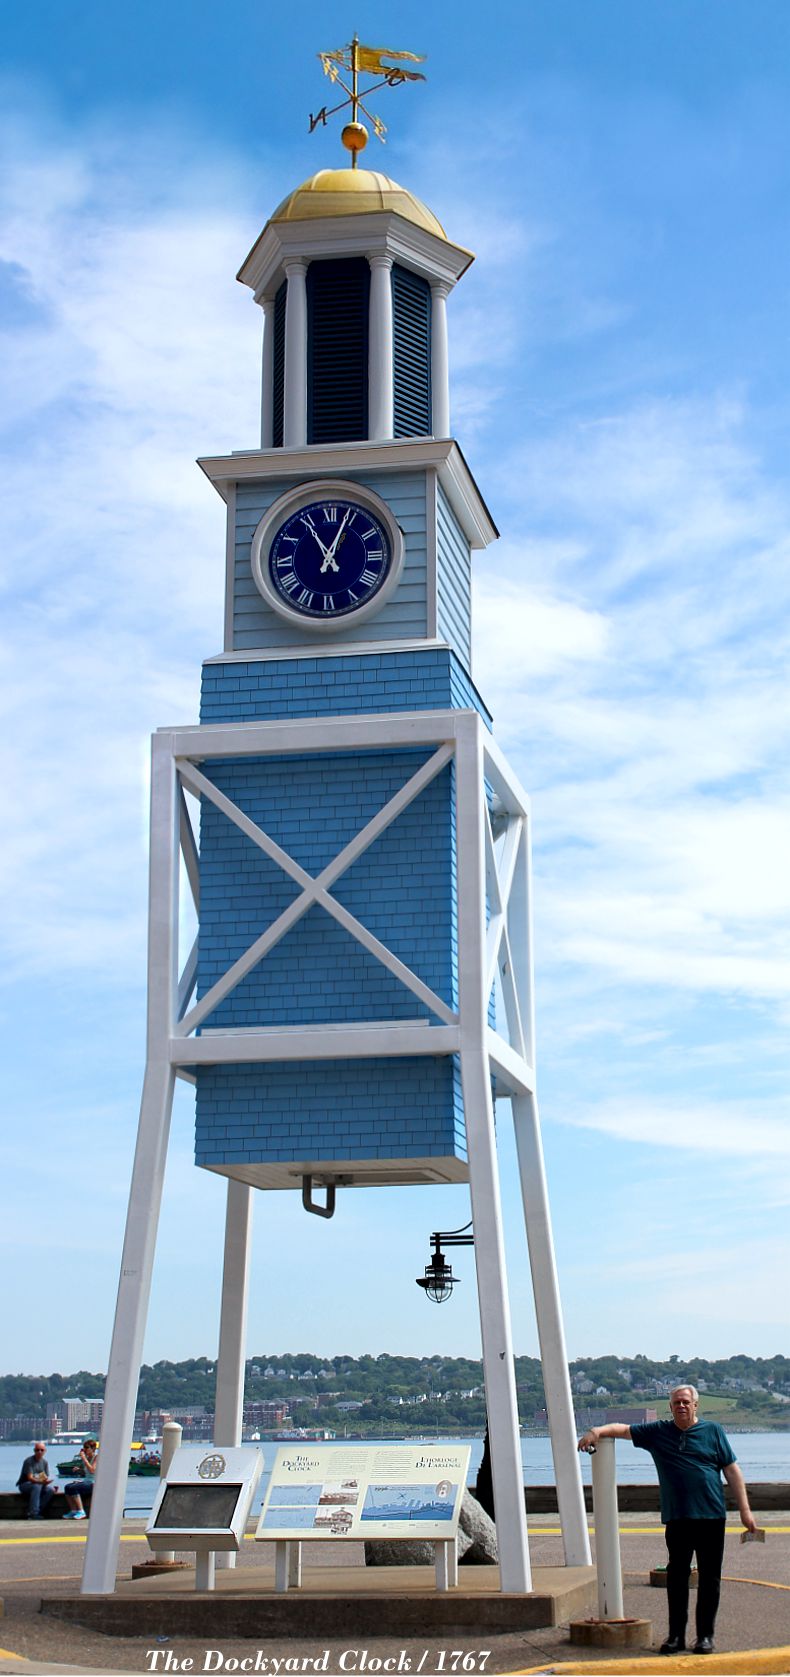 Halifax Dockyard Clock